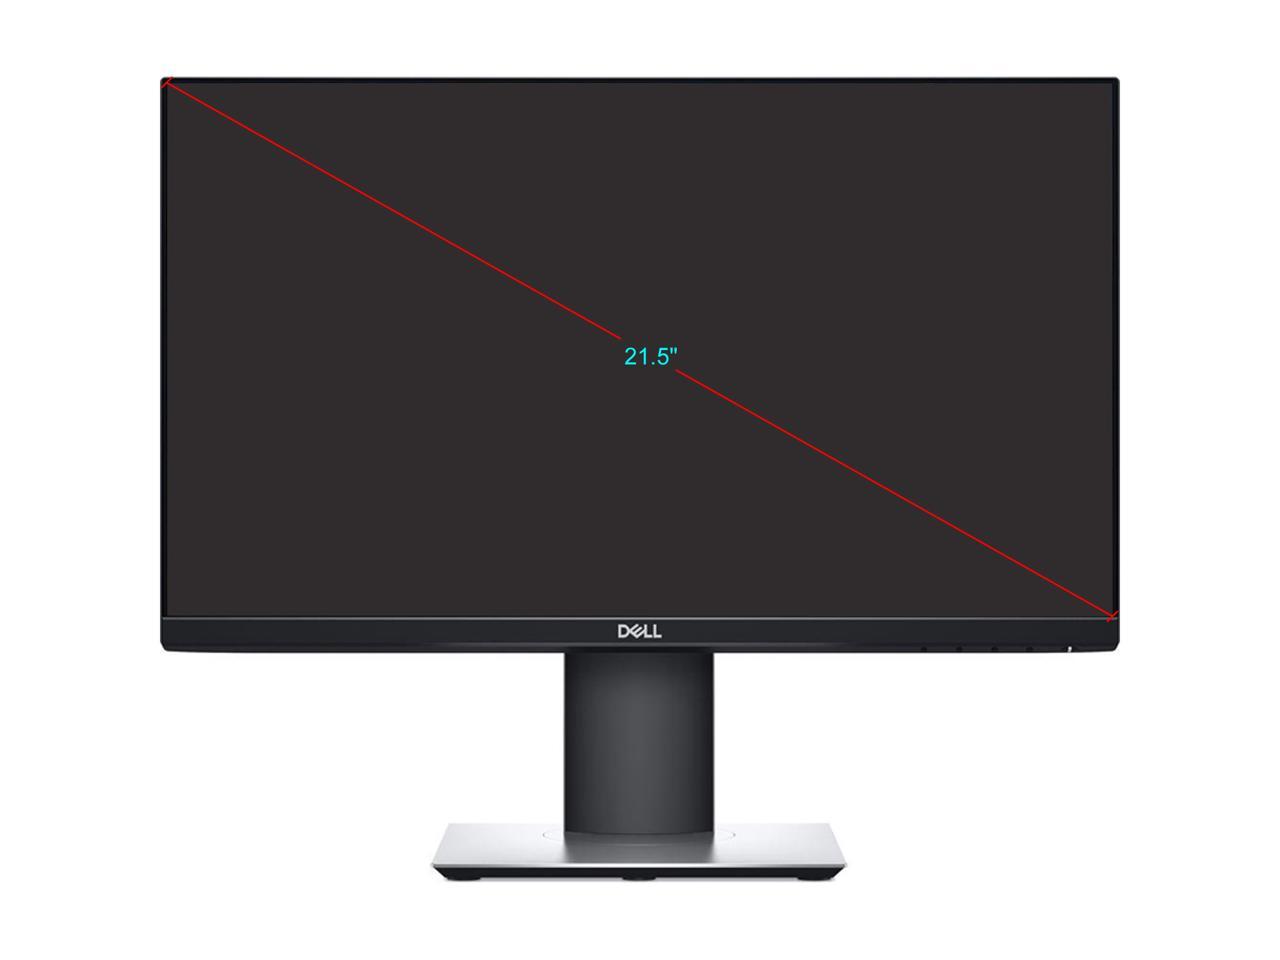 Dell P2219H 21.5" 16:9 Ultrathin Bezel IPS Monitor (TAA Compliant) $149.99